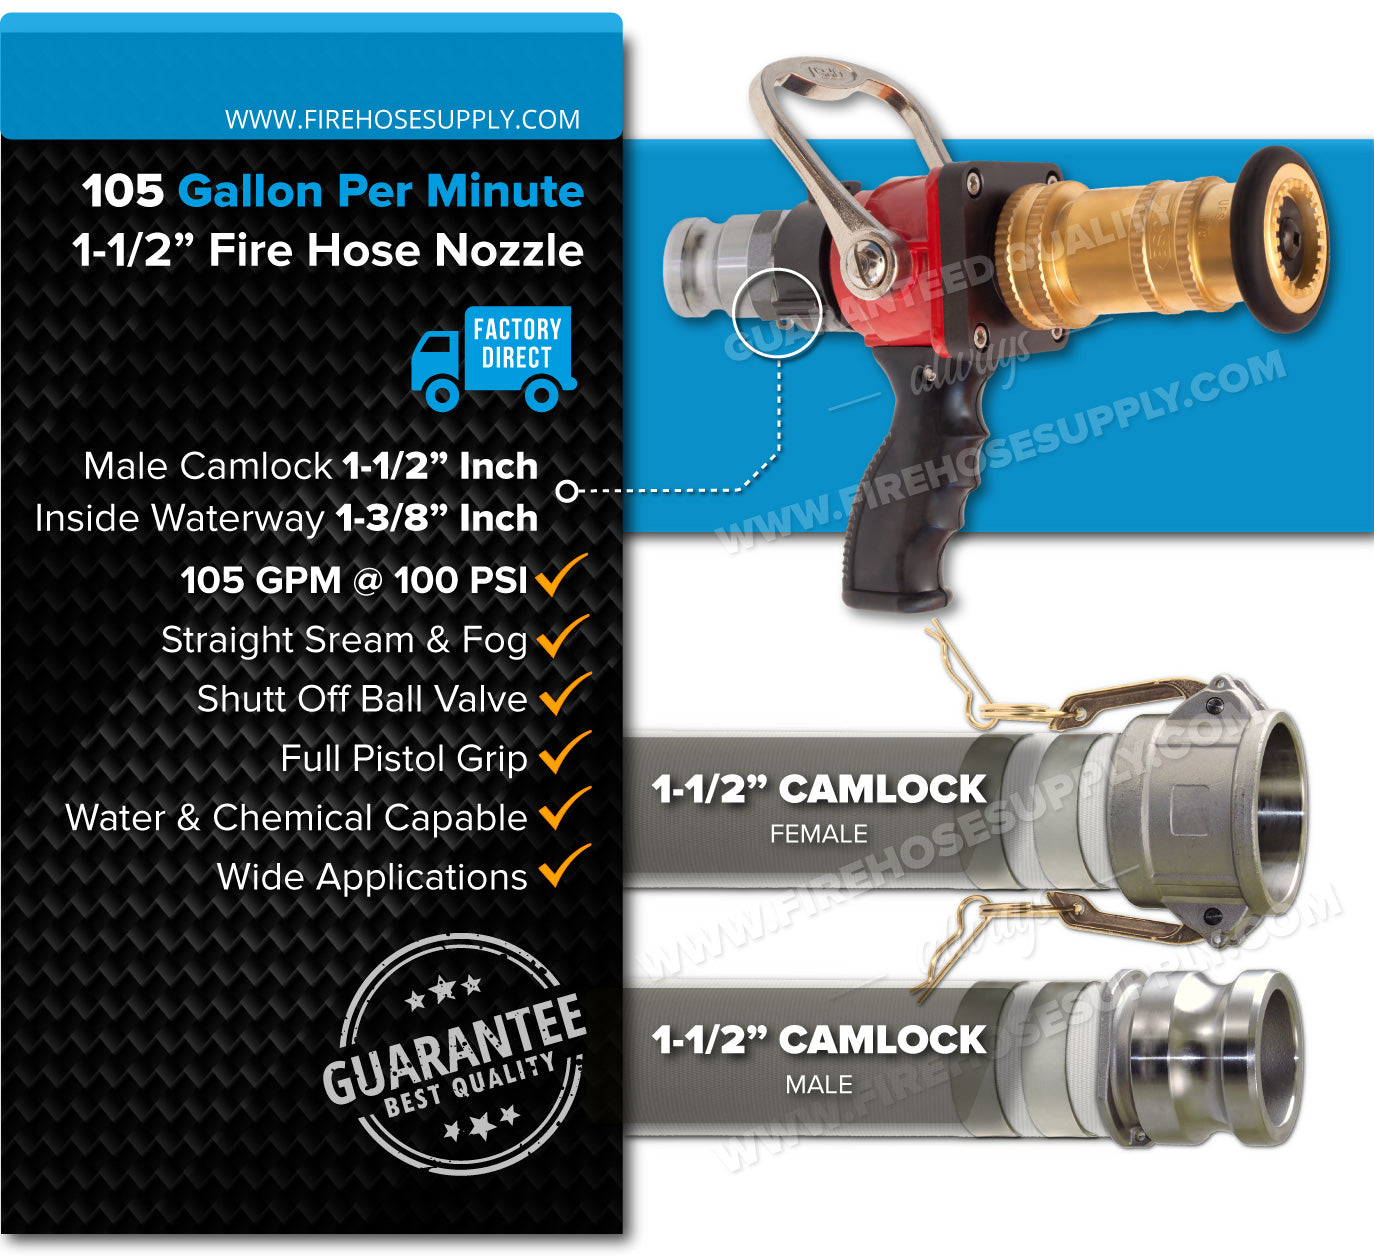 1-1-2 camlock brass fire hose nozzle pistol grip overview